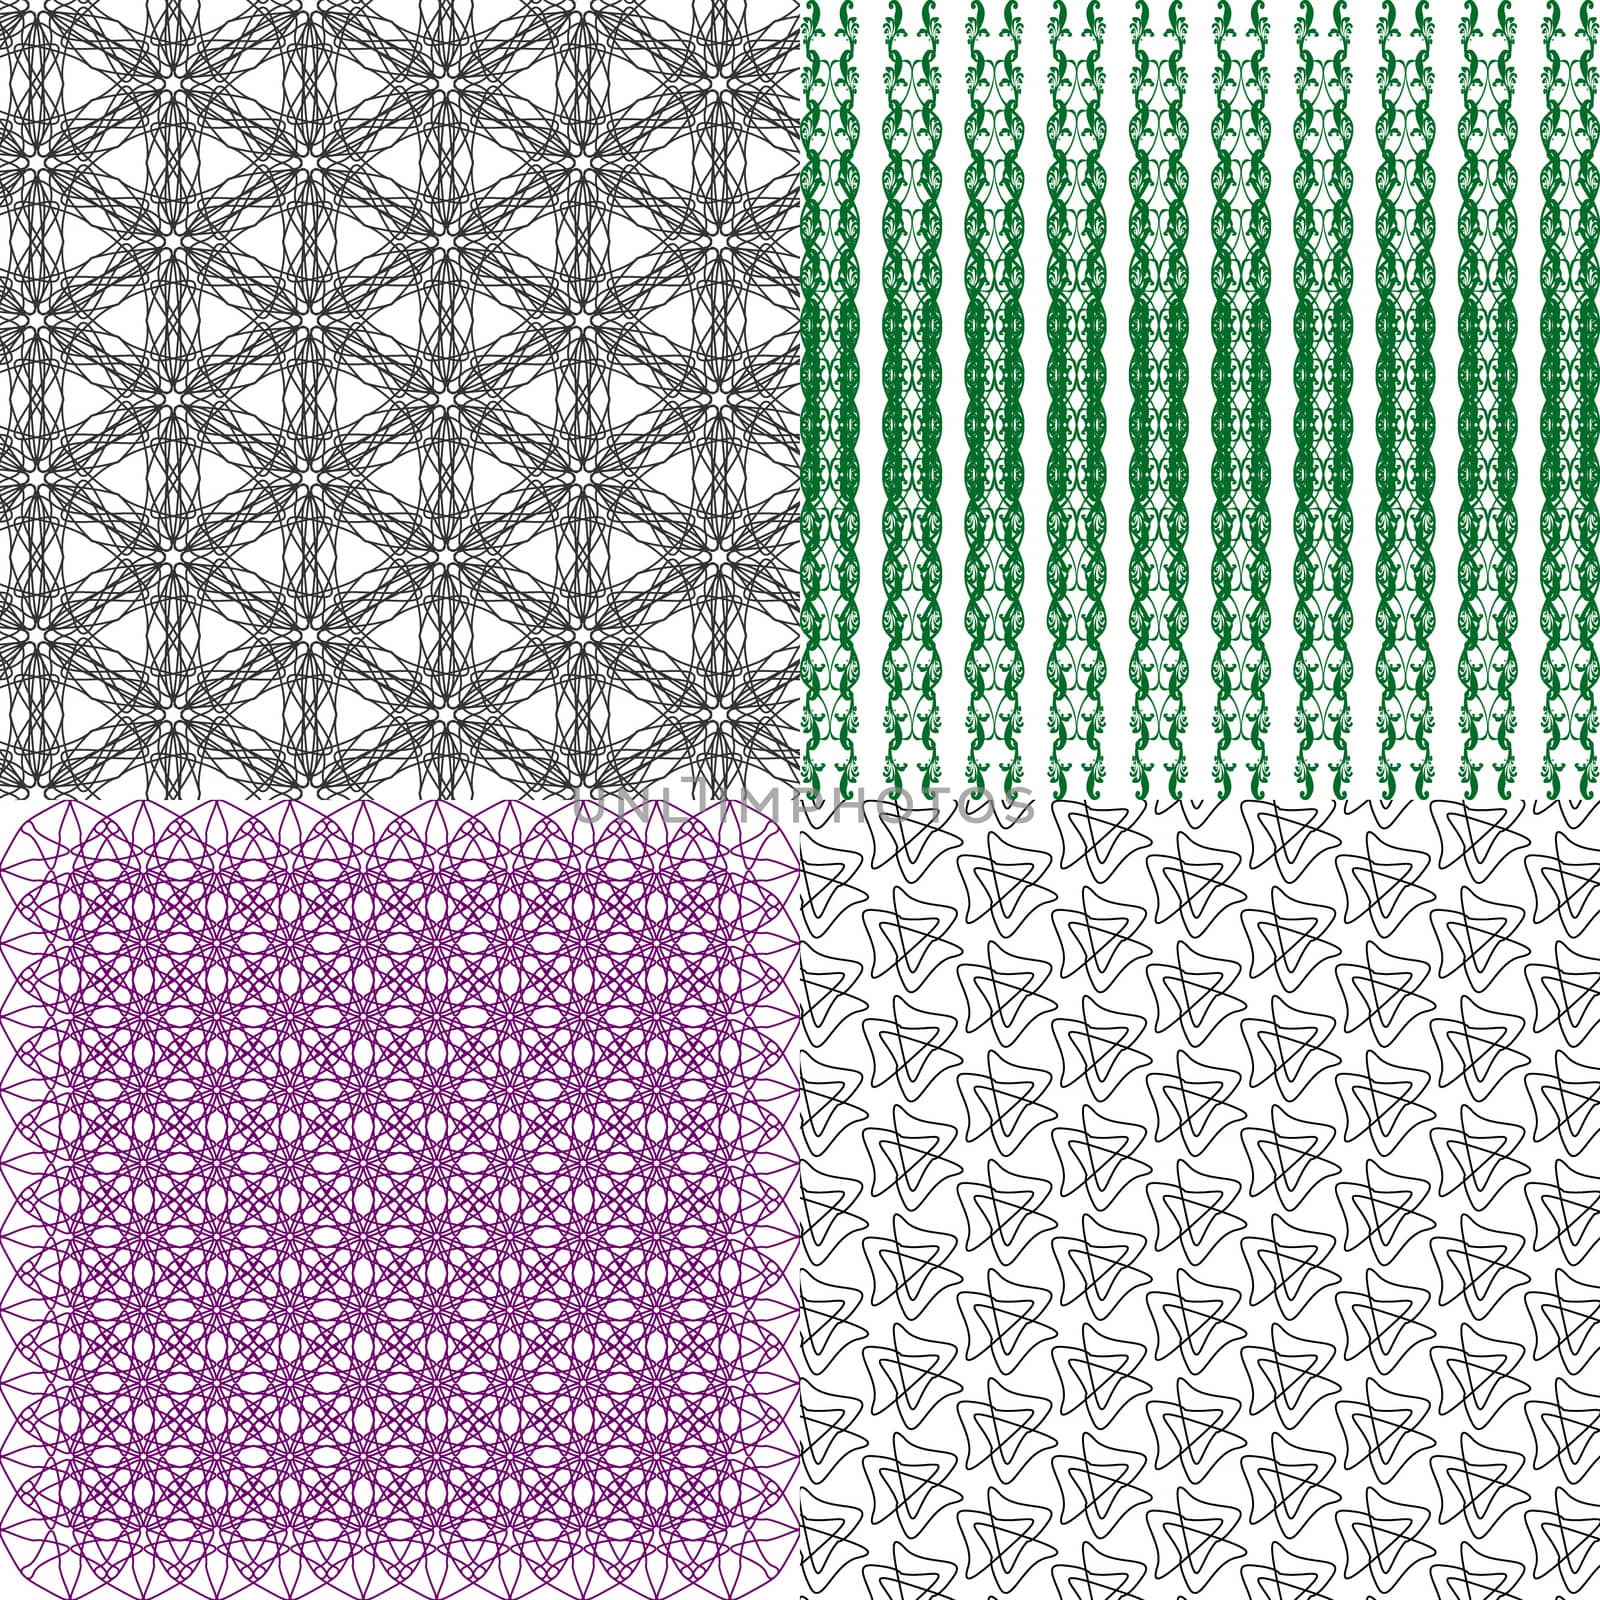 4 Geometric patterns, tiling. Set of  abstract vintage backgrounds.  illustration